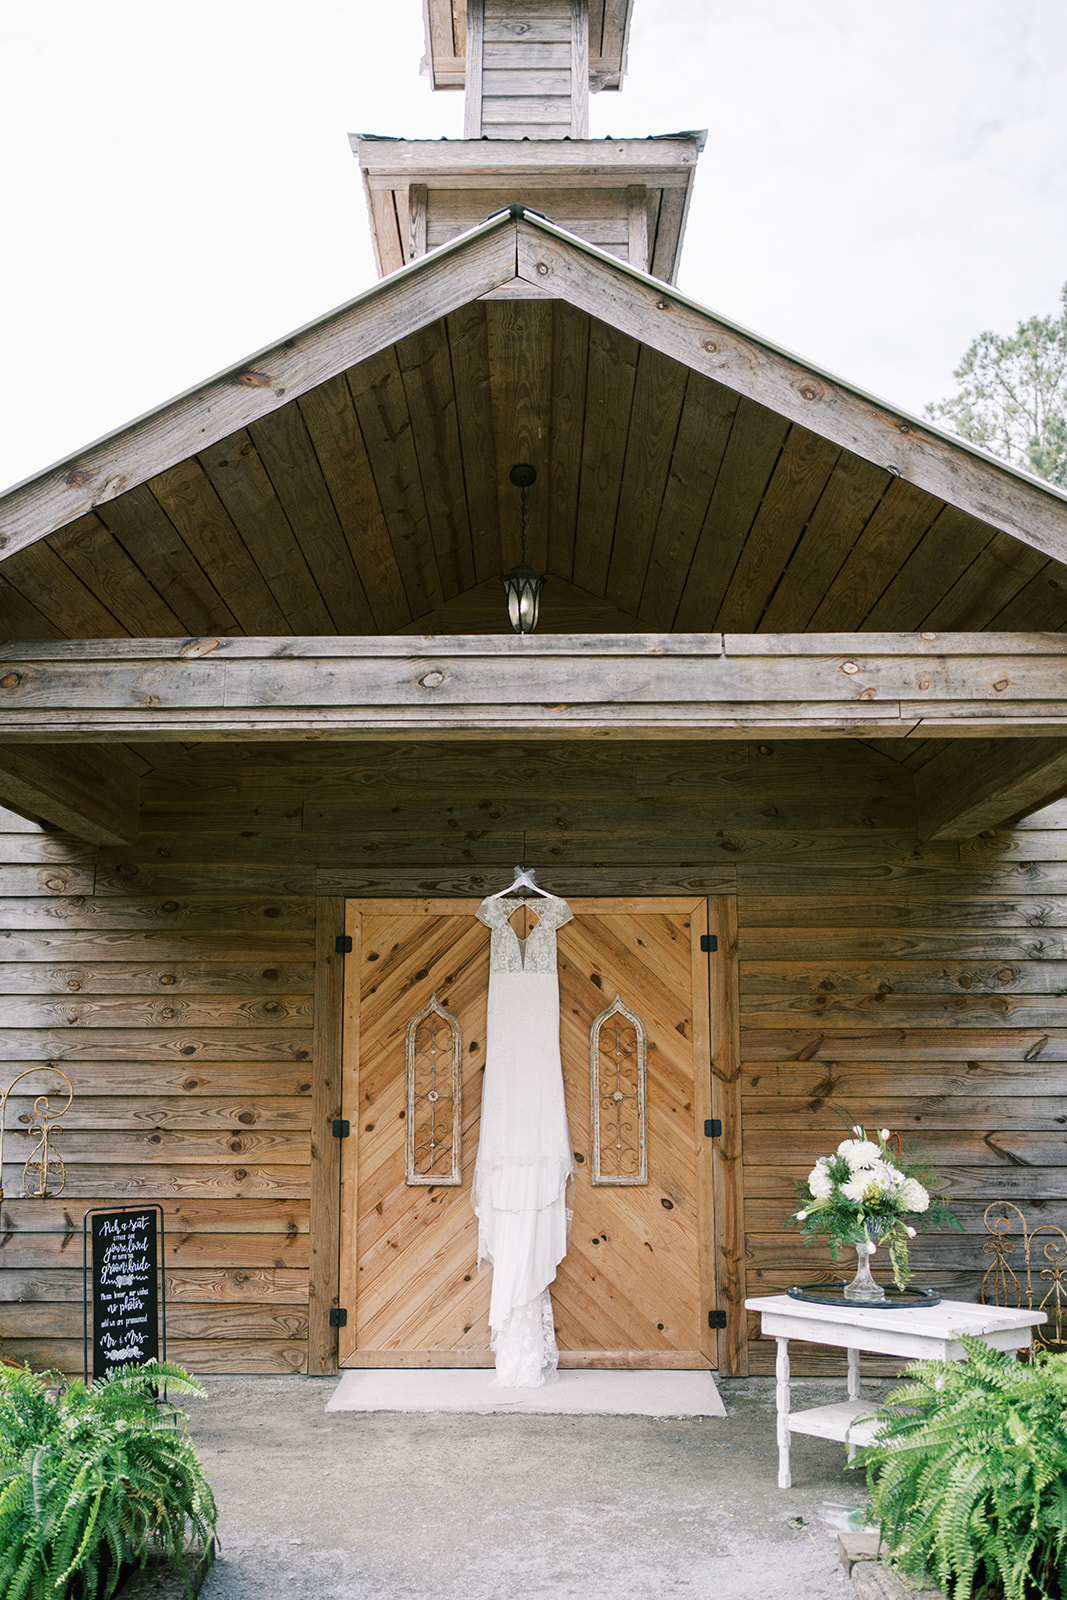 The wedding dress from Weddings, Pageants, & Proms hangs on the door at Dry Creek Chapel